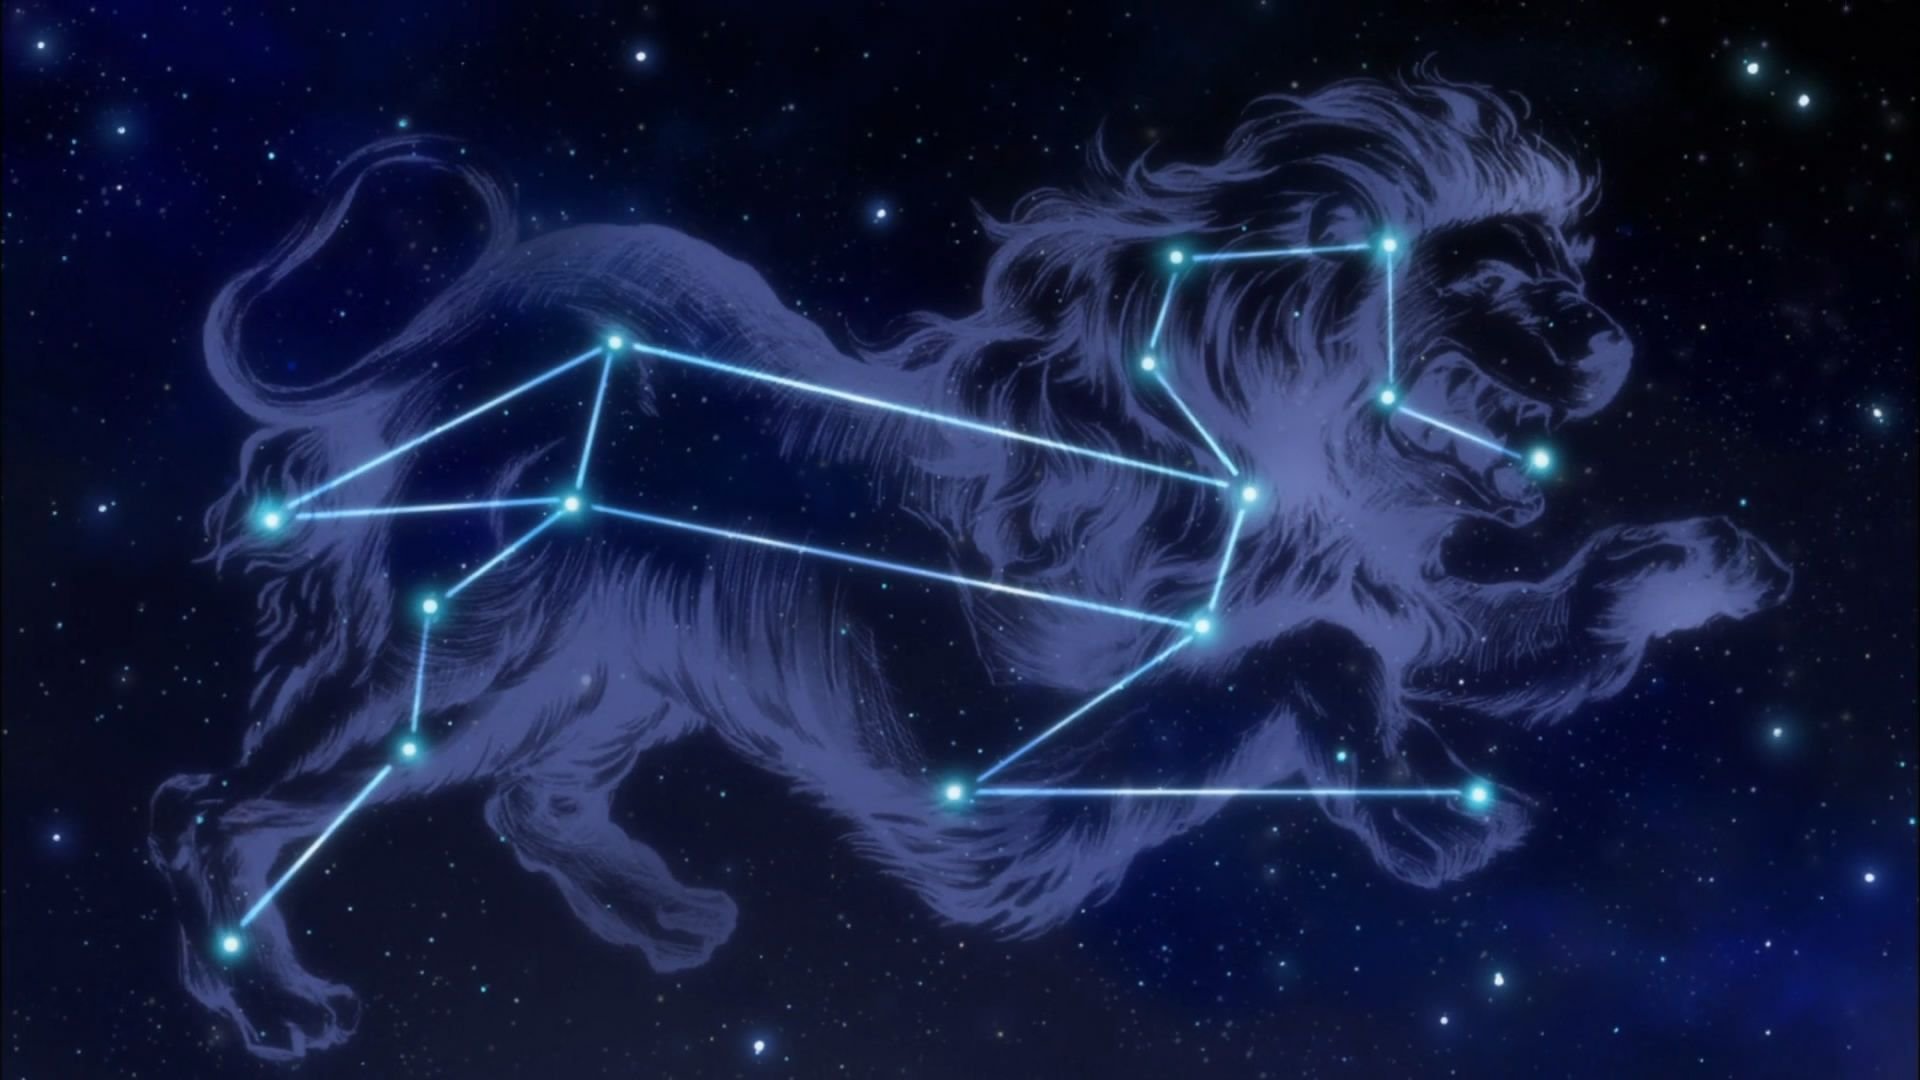 Фигура льва созвездие. Созвездие Льва. Созвездие Лев астеризм. Лев зодиакальное зодиакальное Созвездие. Созвездие Льва Созвездие Льва.